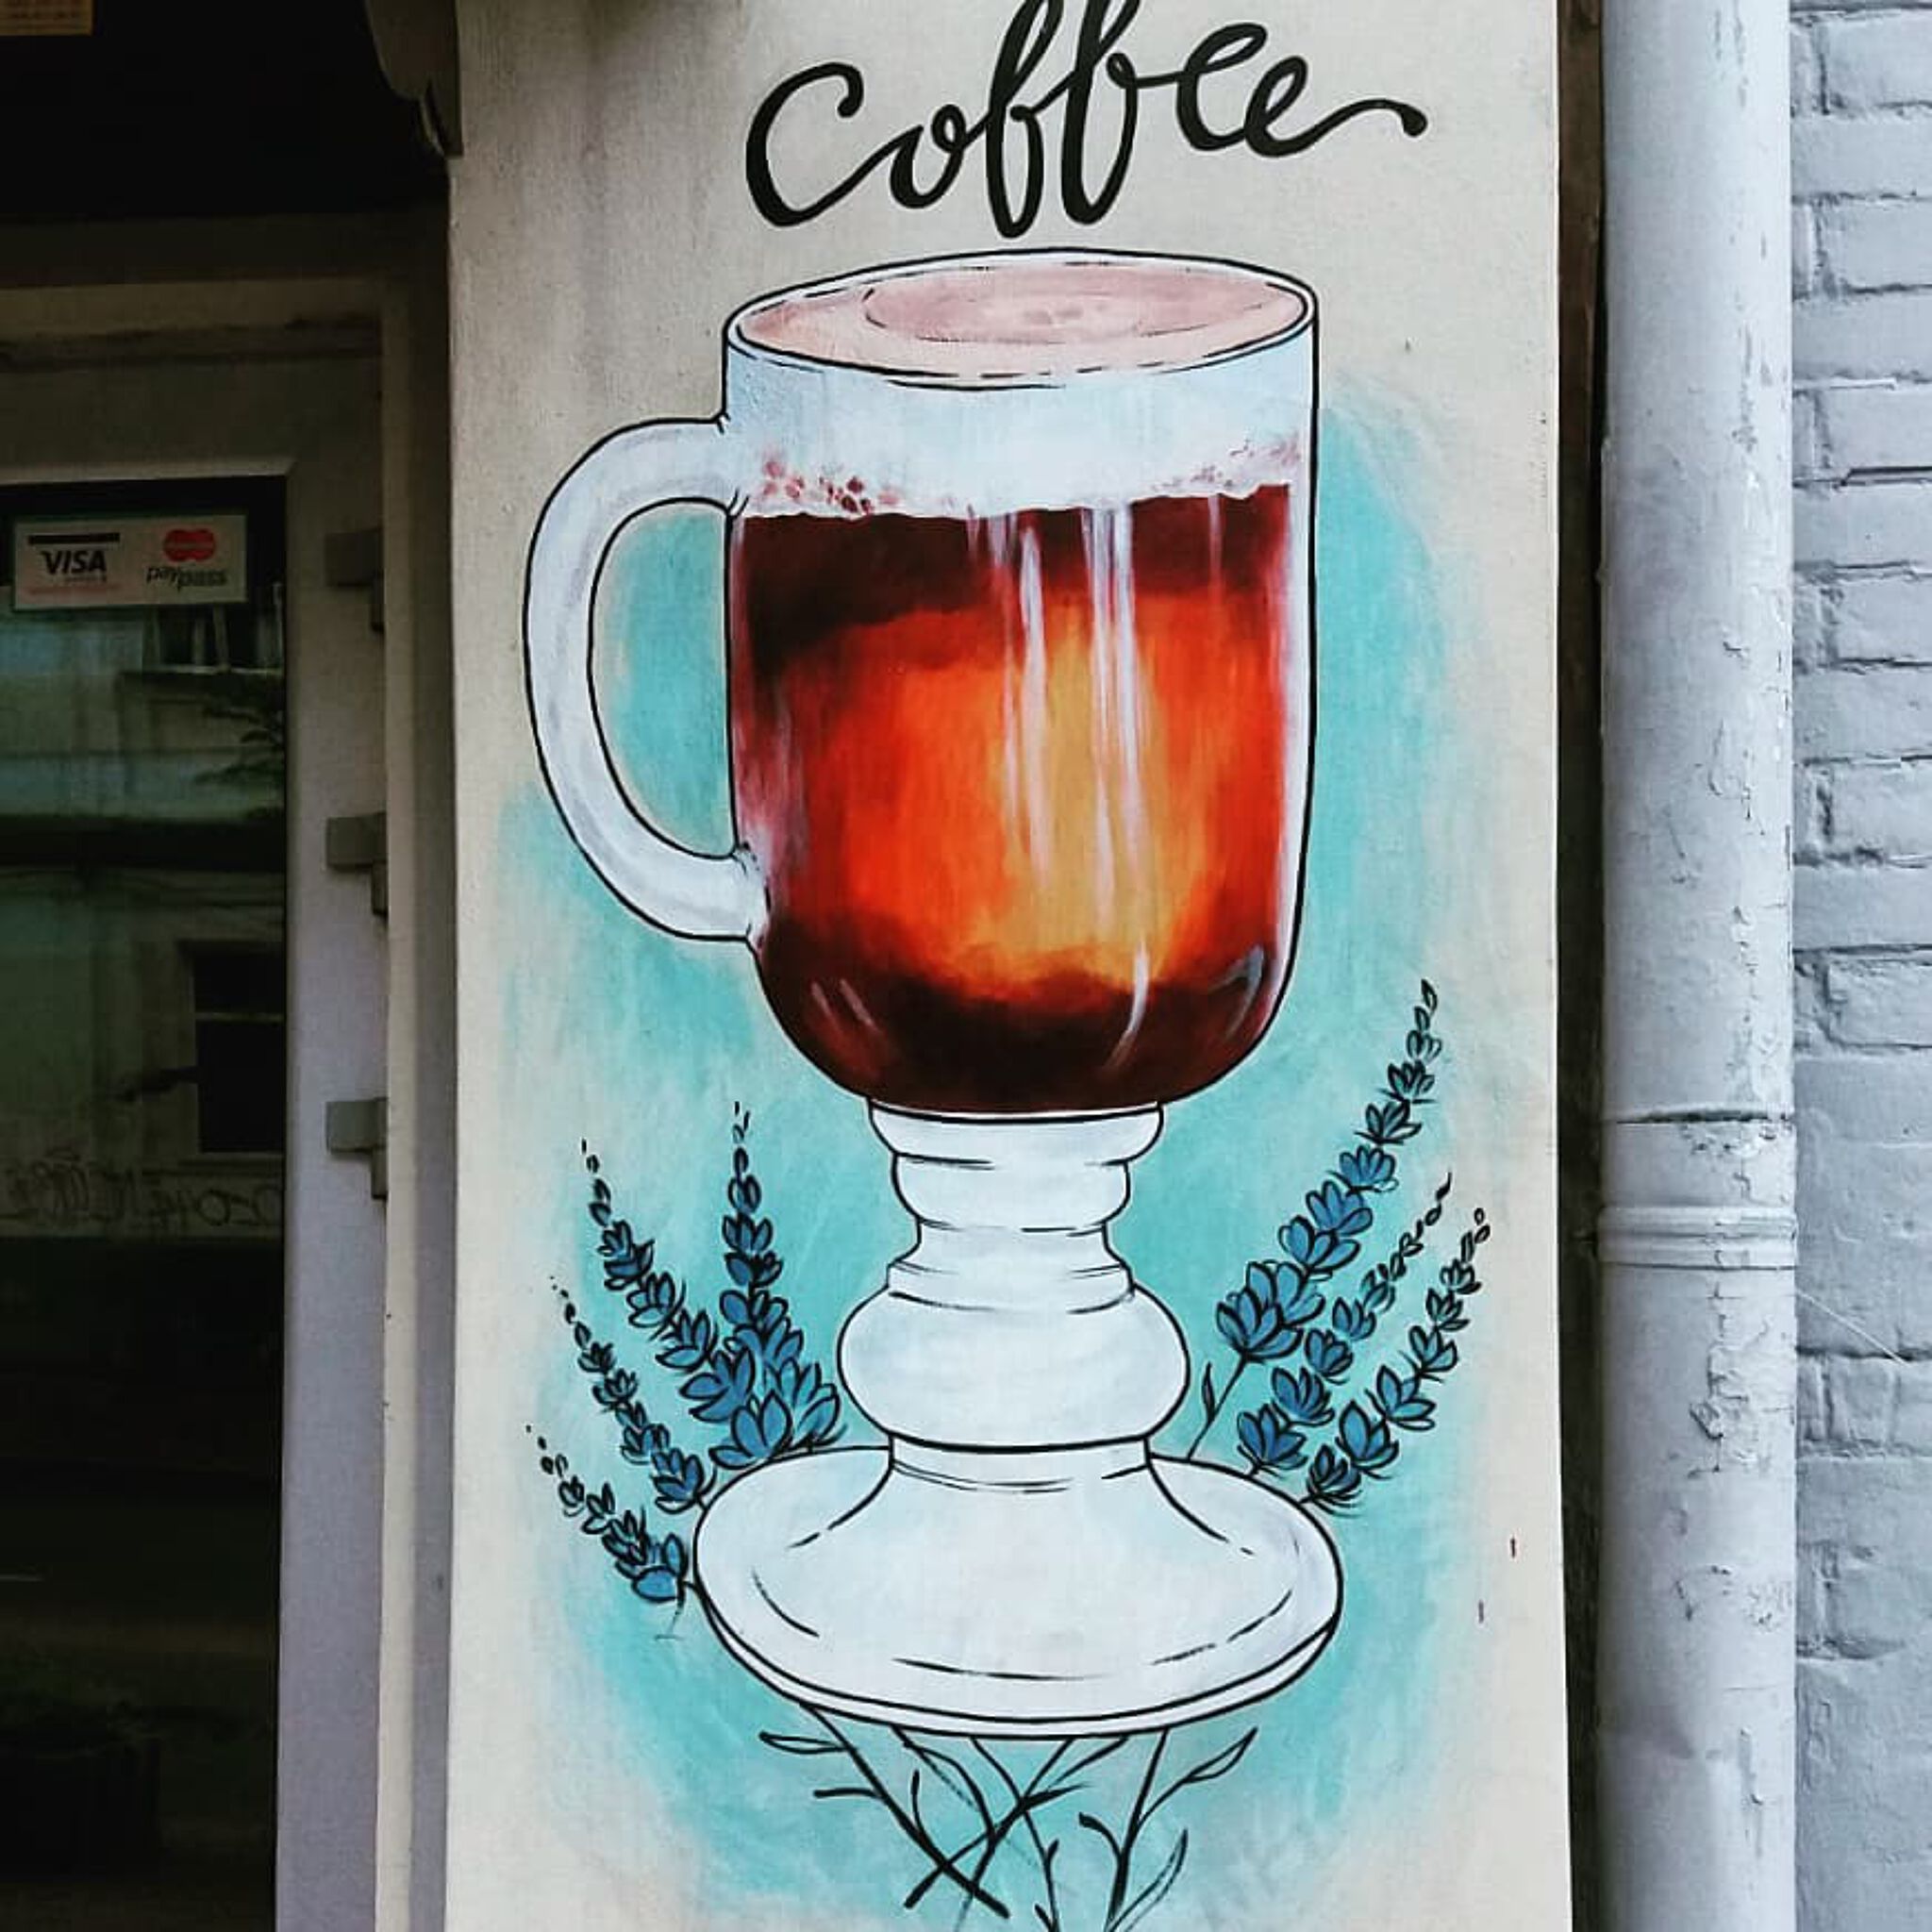 Unknown - Kyiv&mdash;Dragon, coffee, tea